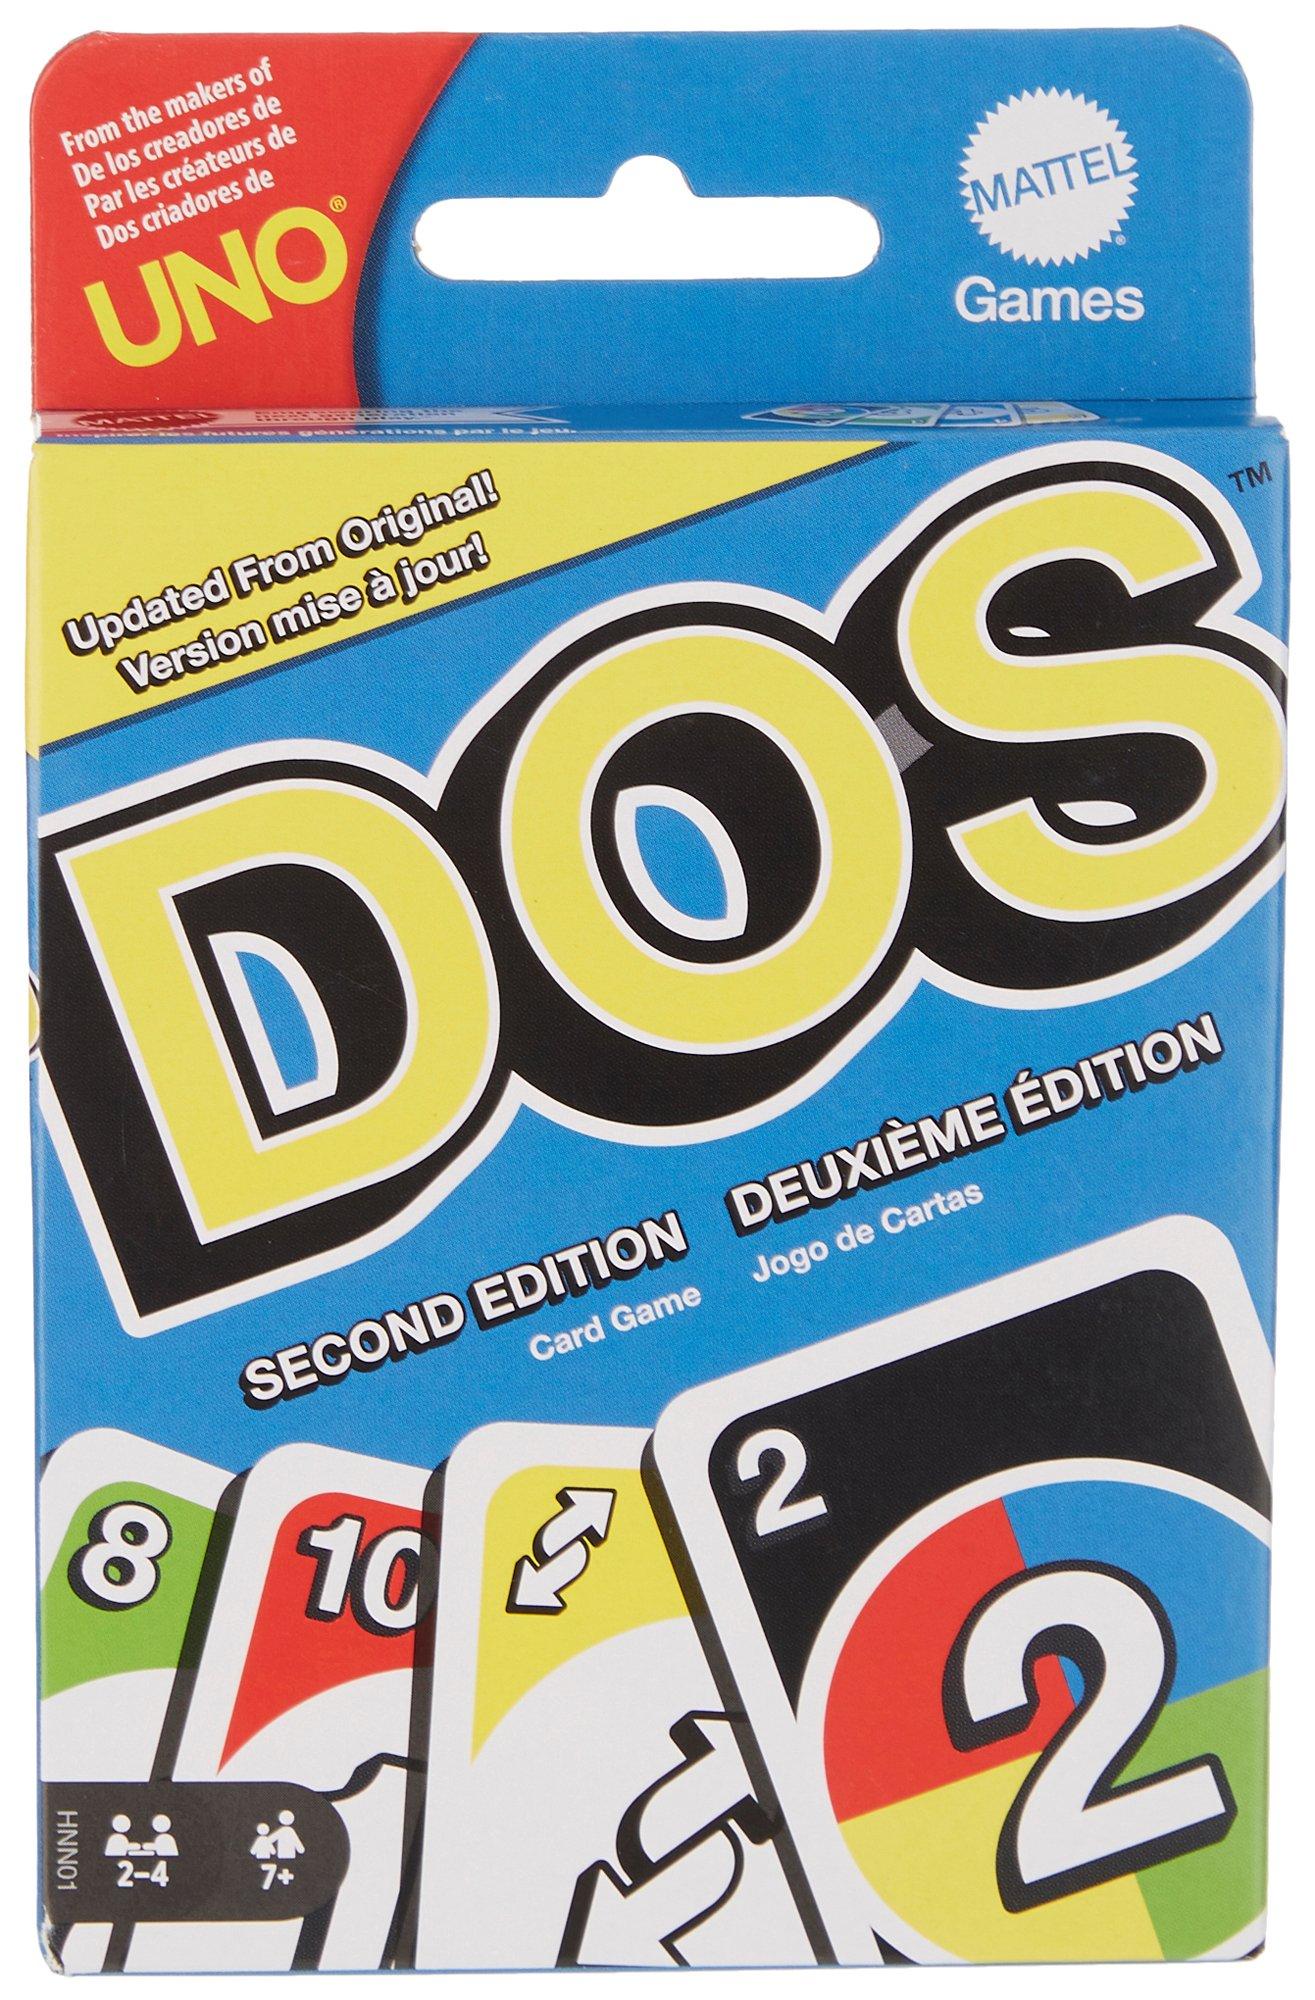 UNO DOS Card Game Second Edition